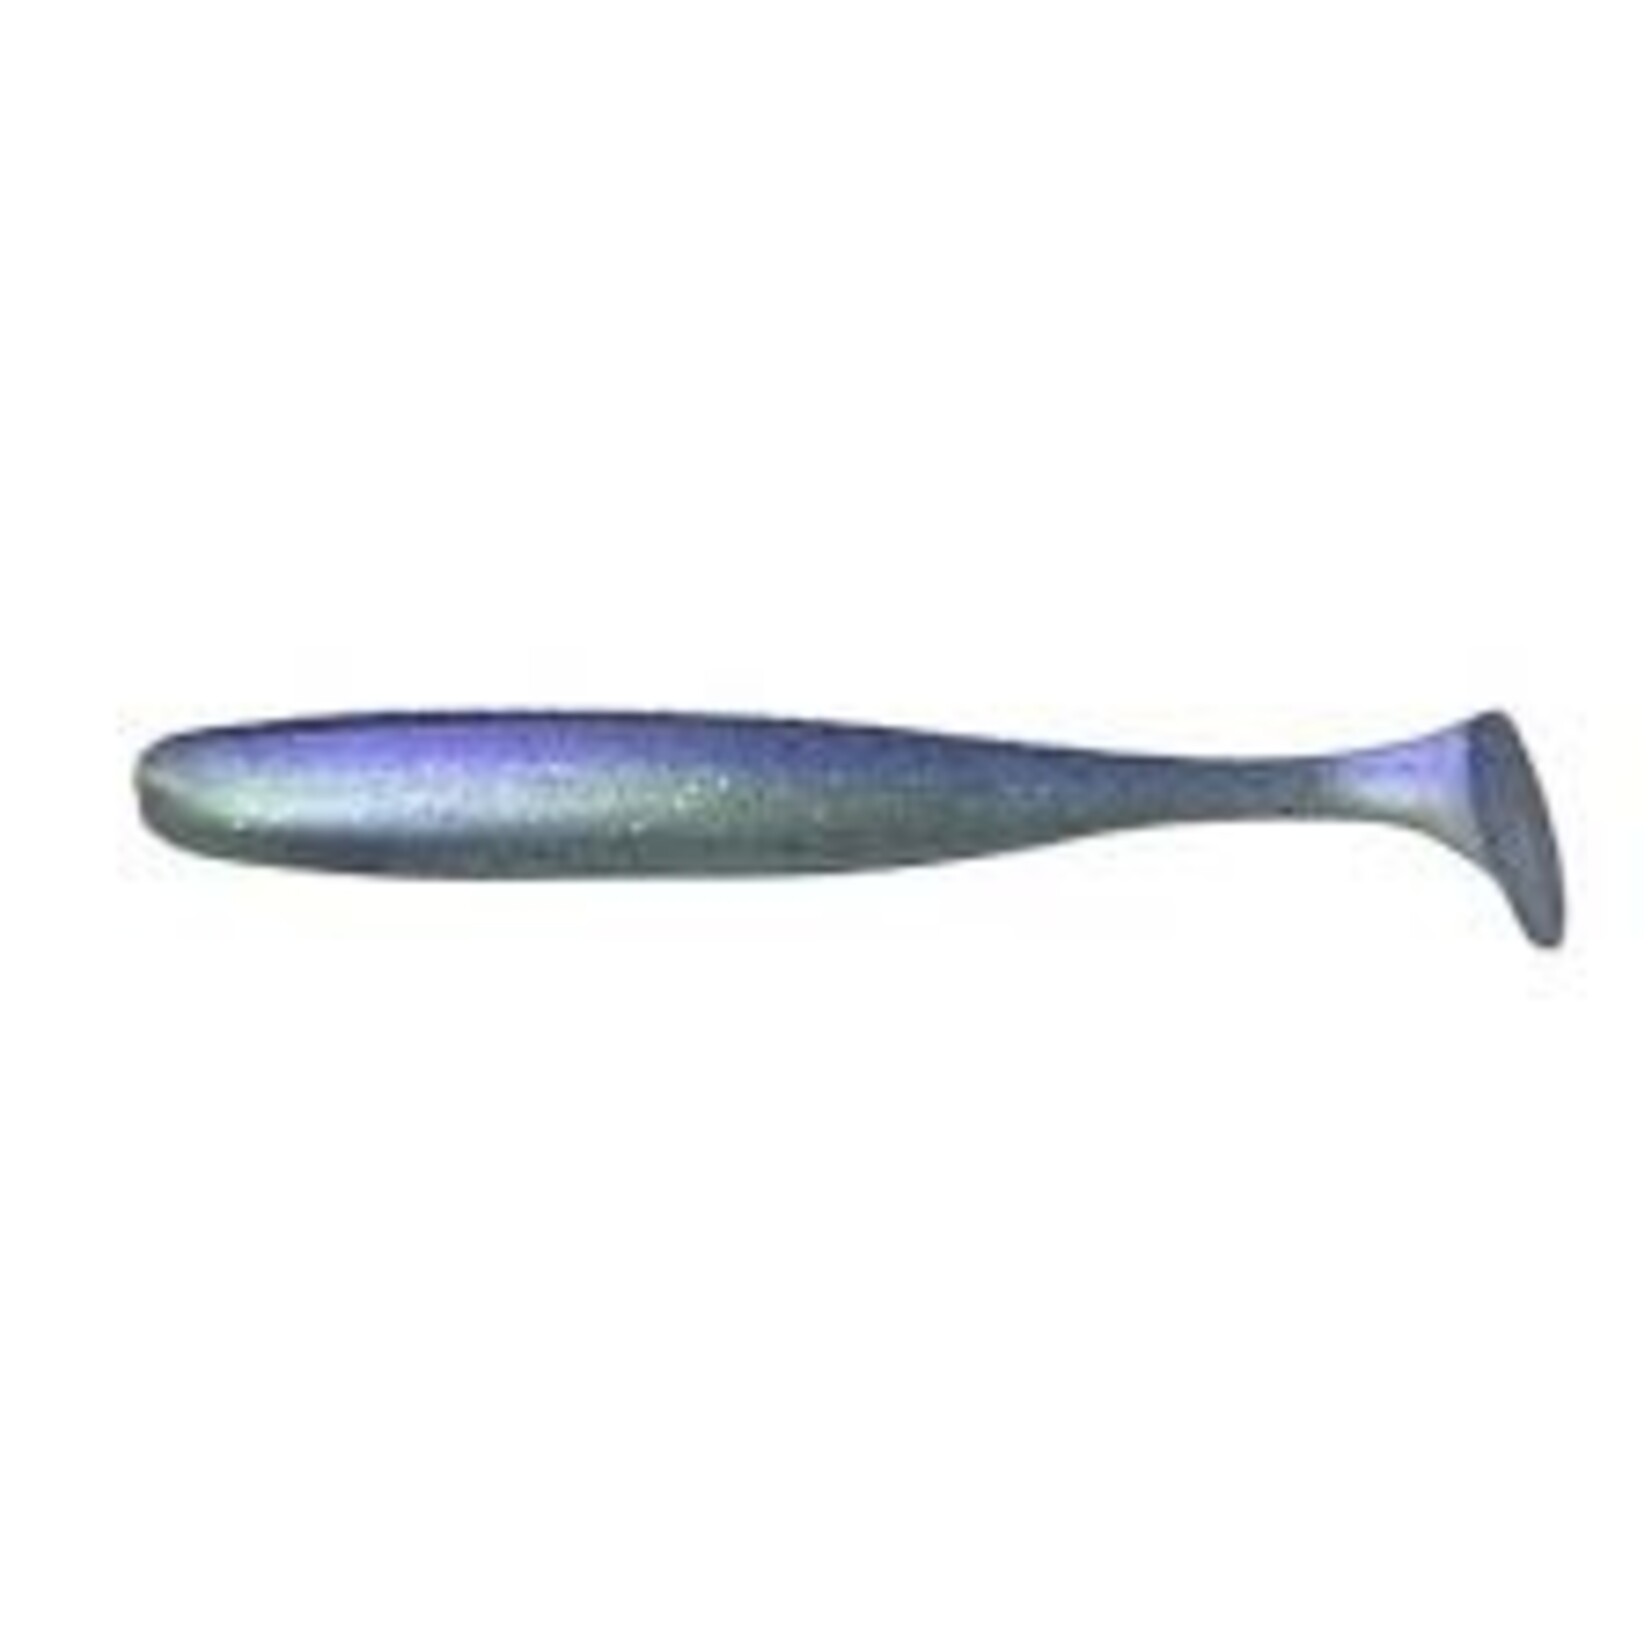 Jigs Target Baits Paddle Fish 3-1/2'' 6/Pqt - Pronature Plessisville -  Pronature Victoriaville